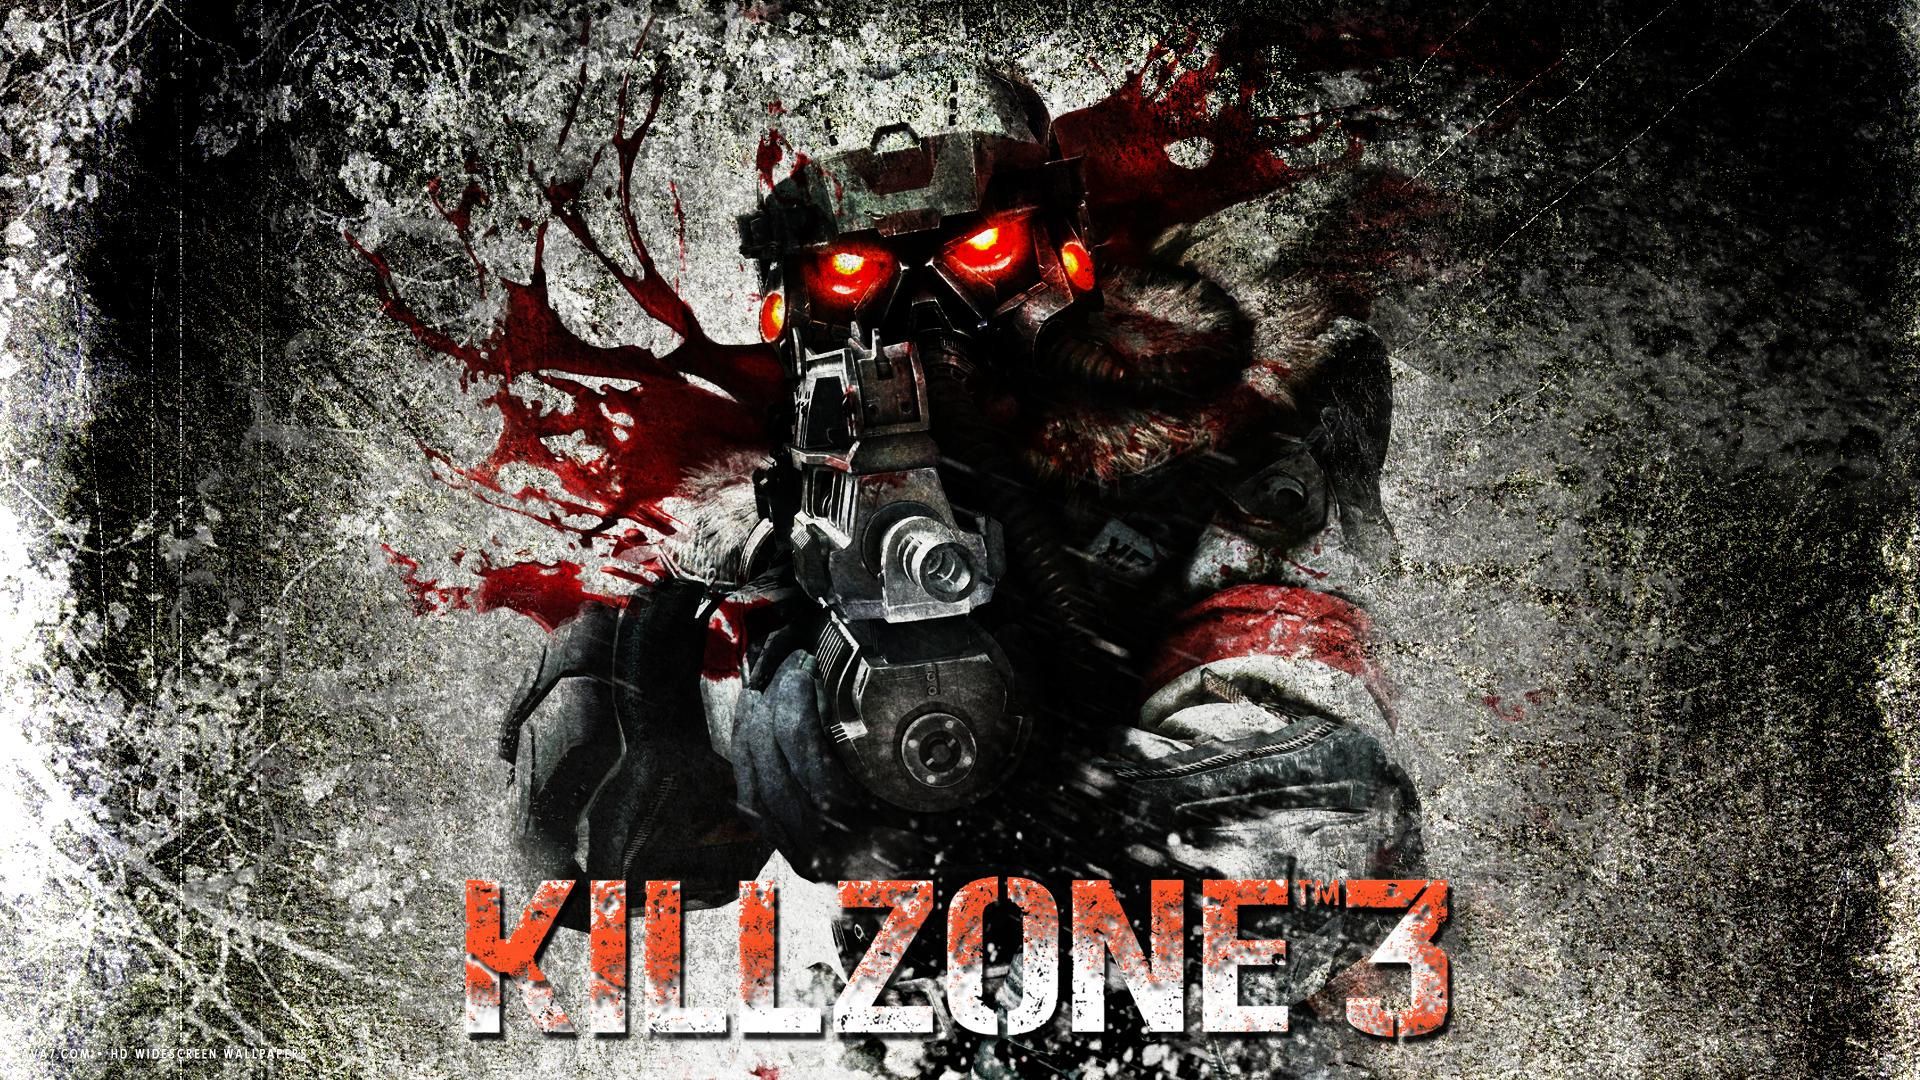 Killzone 3 Wallpapers